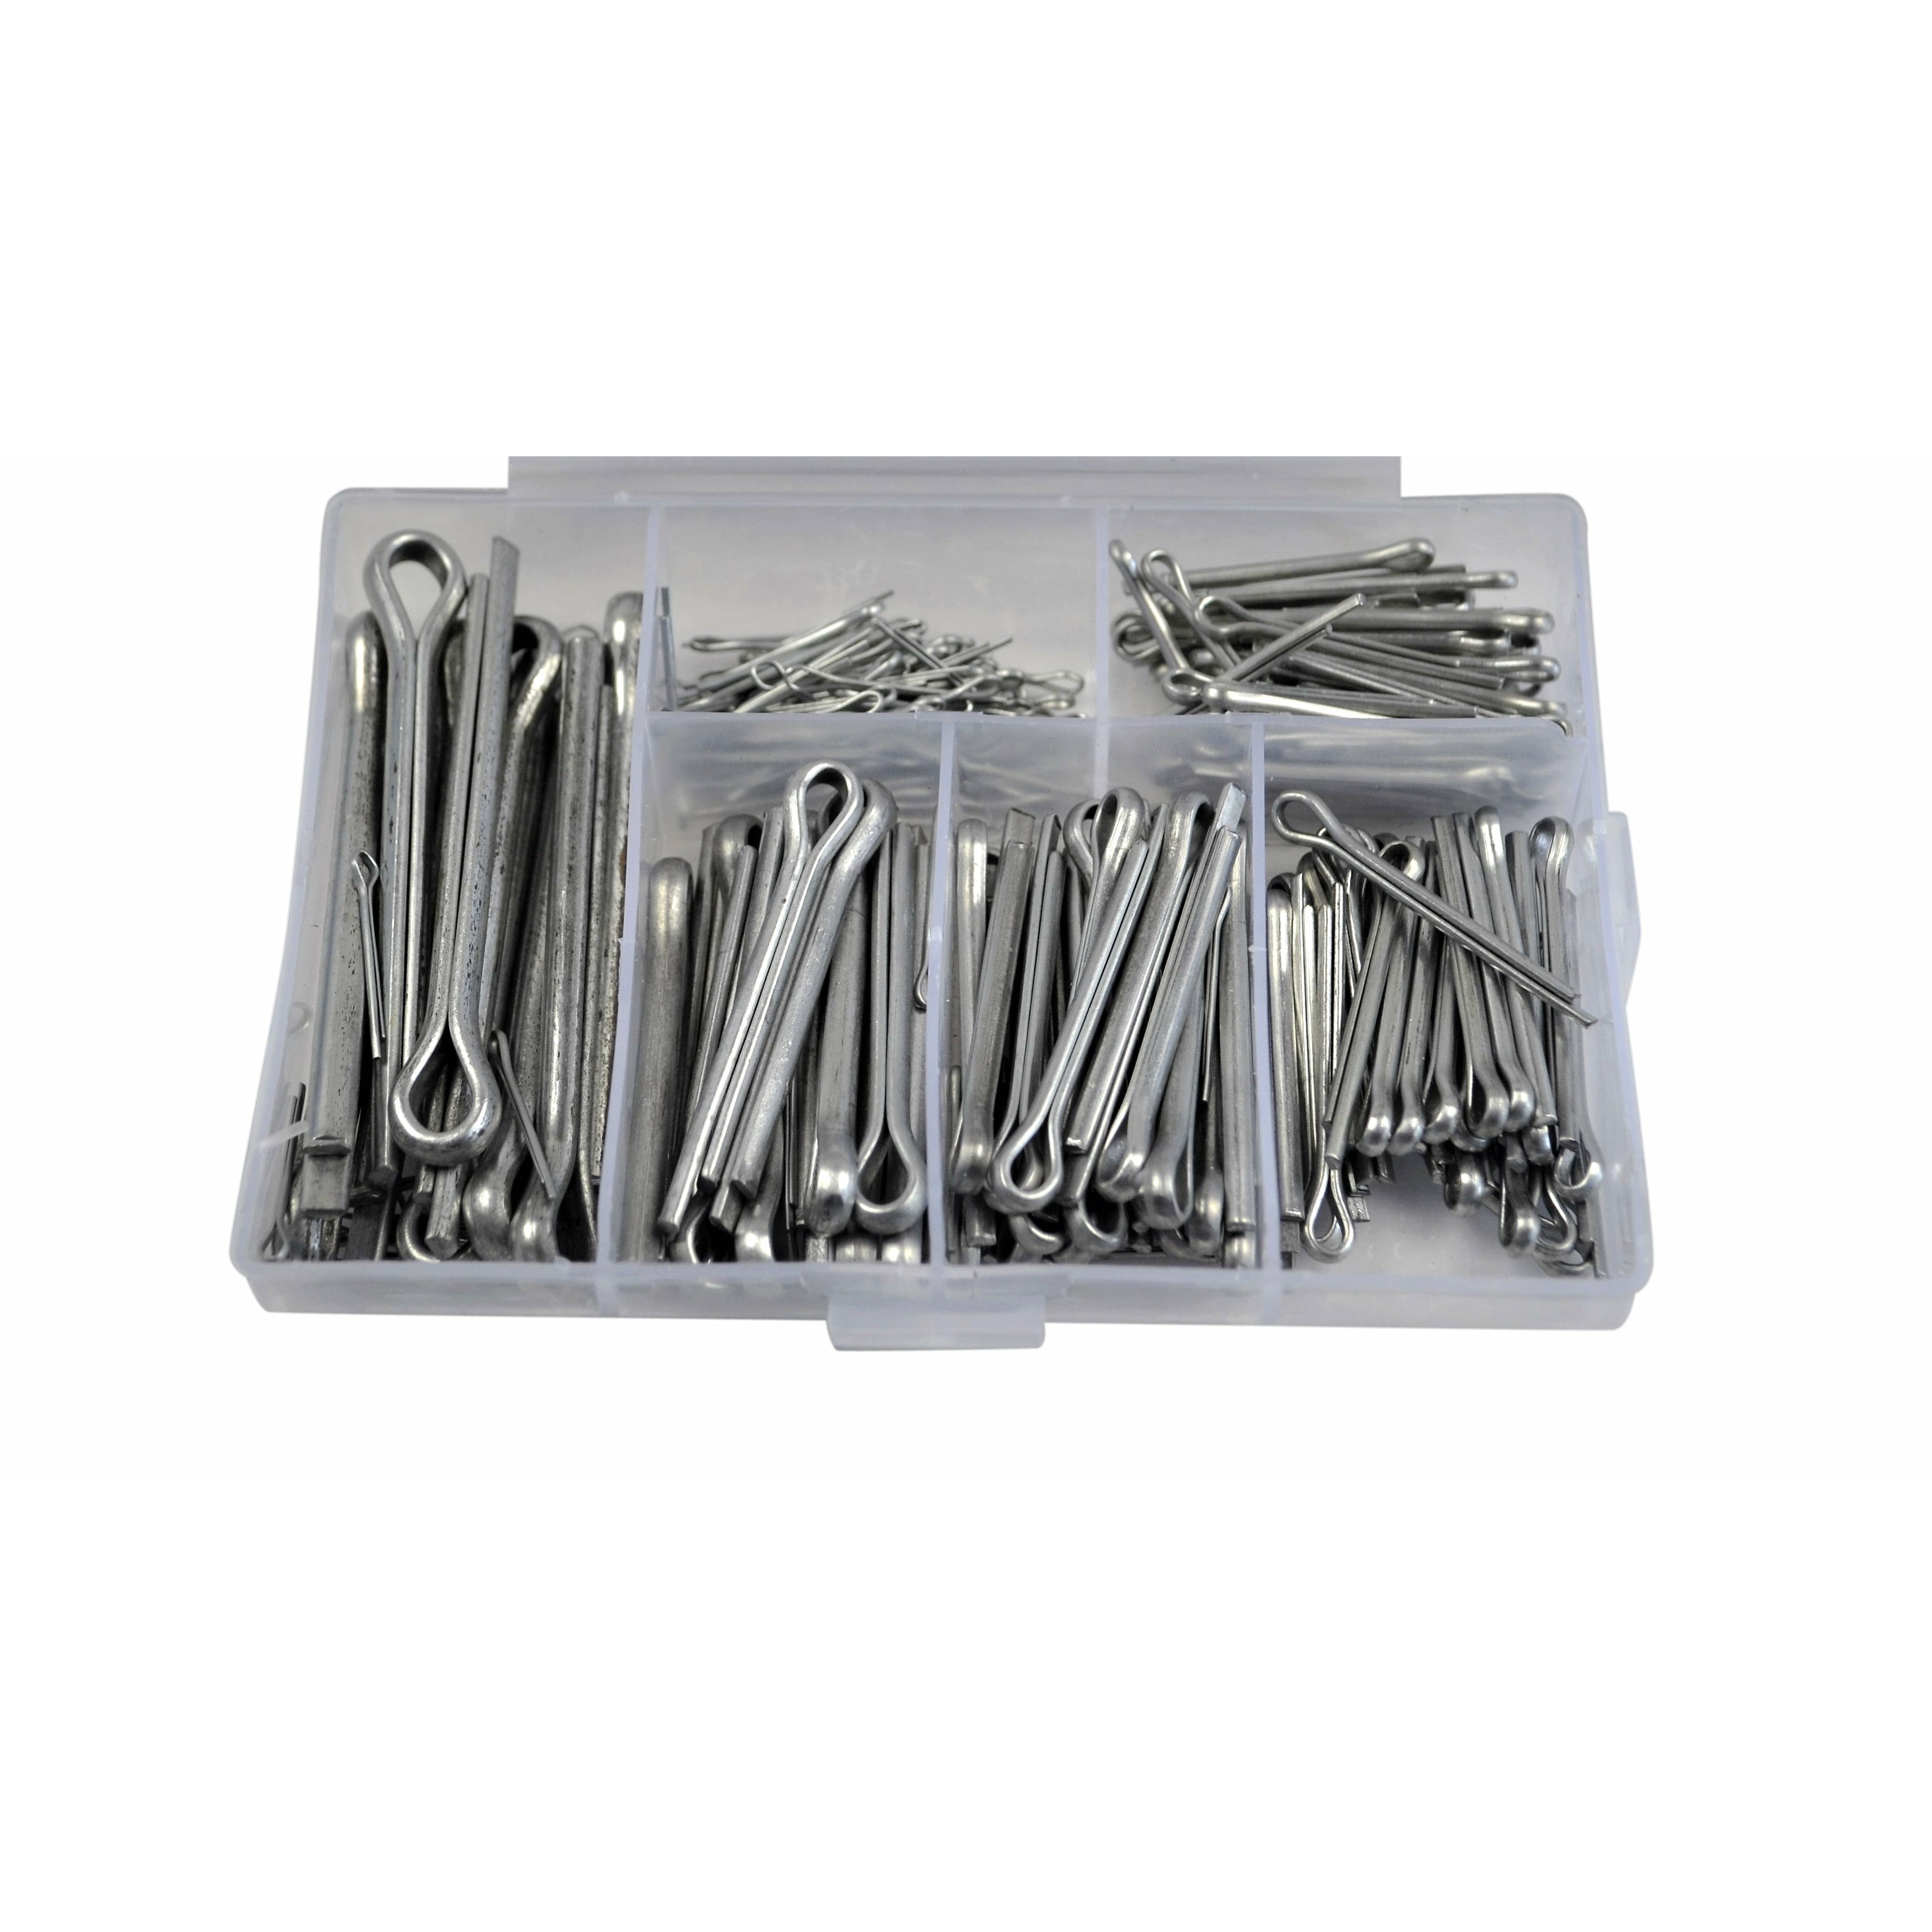 60 Piece Clevis Pin Kit & 230 Piece Cotter Pin Grab Kit Assortment